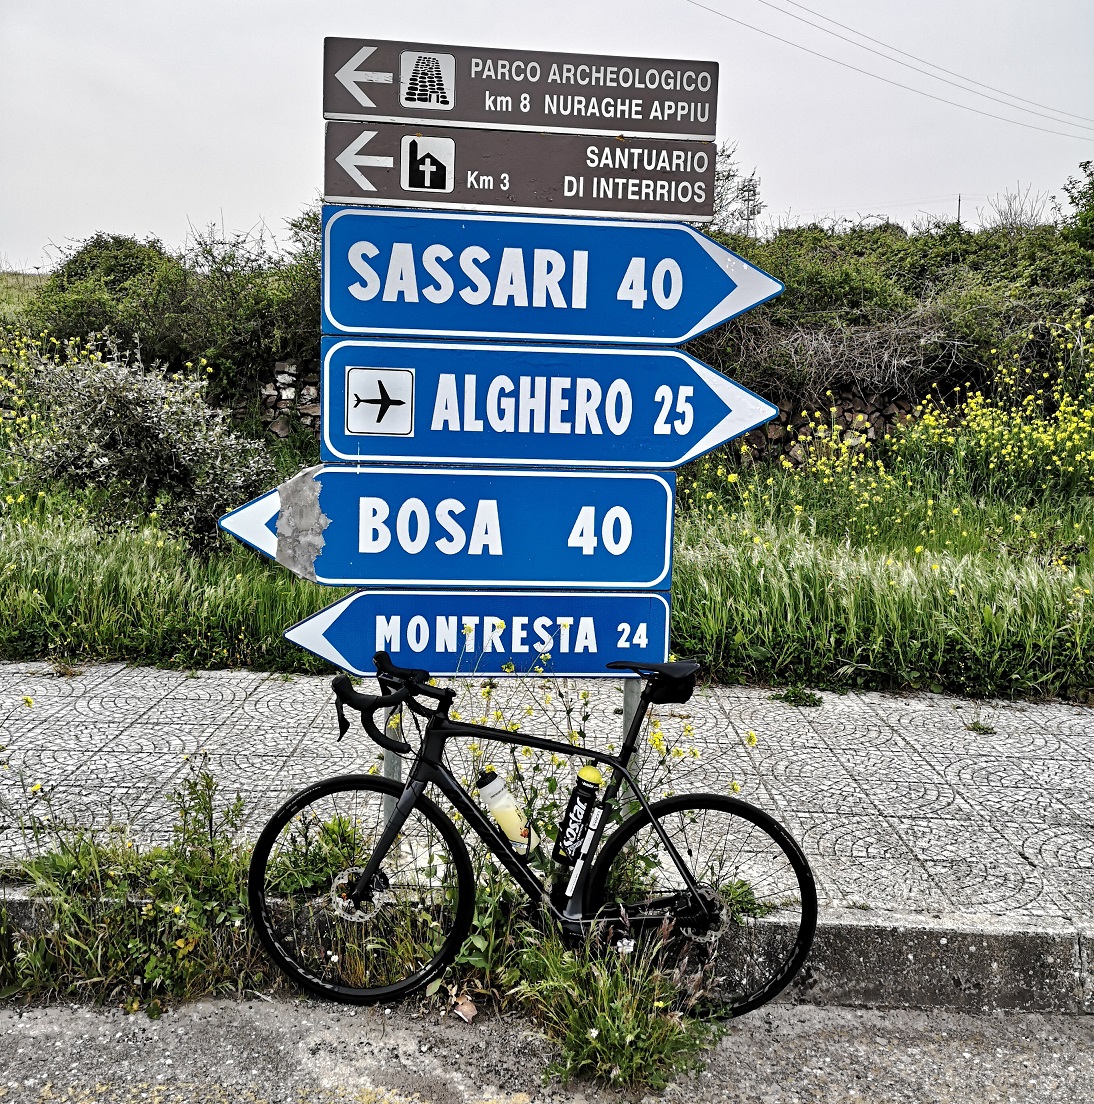 Alghero - Bosa 55km